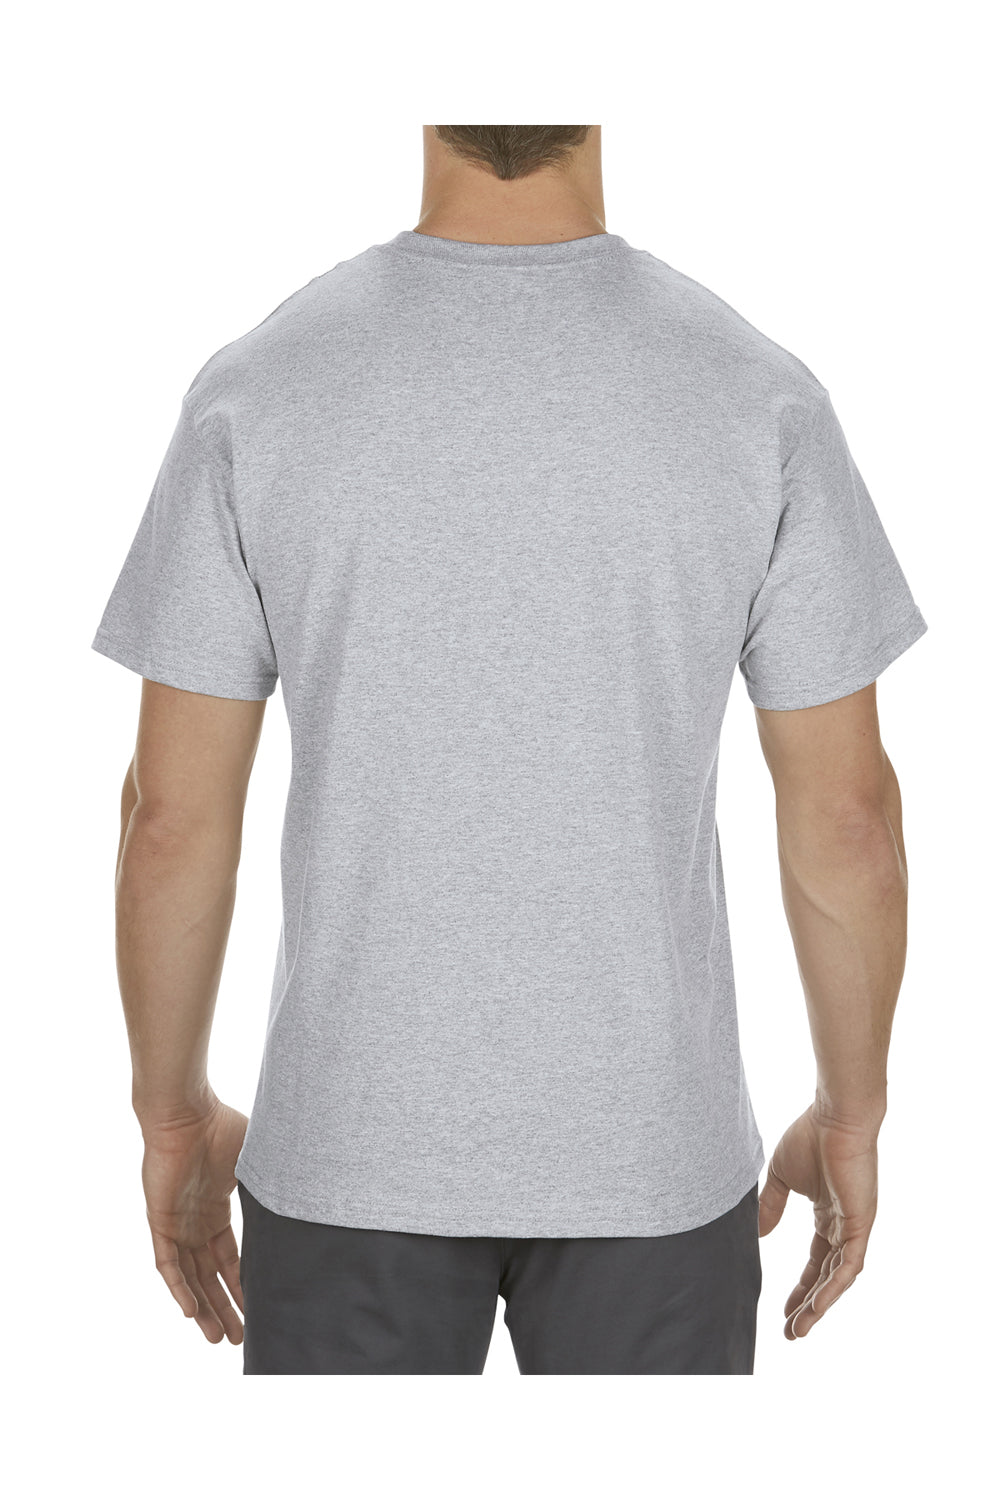 Alstyle AL1901 Mens Short Sleeve Crewneck T-Shirt Heather Grey Back